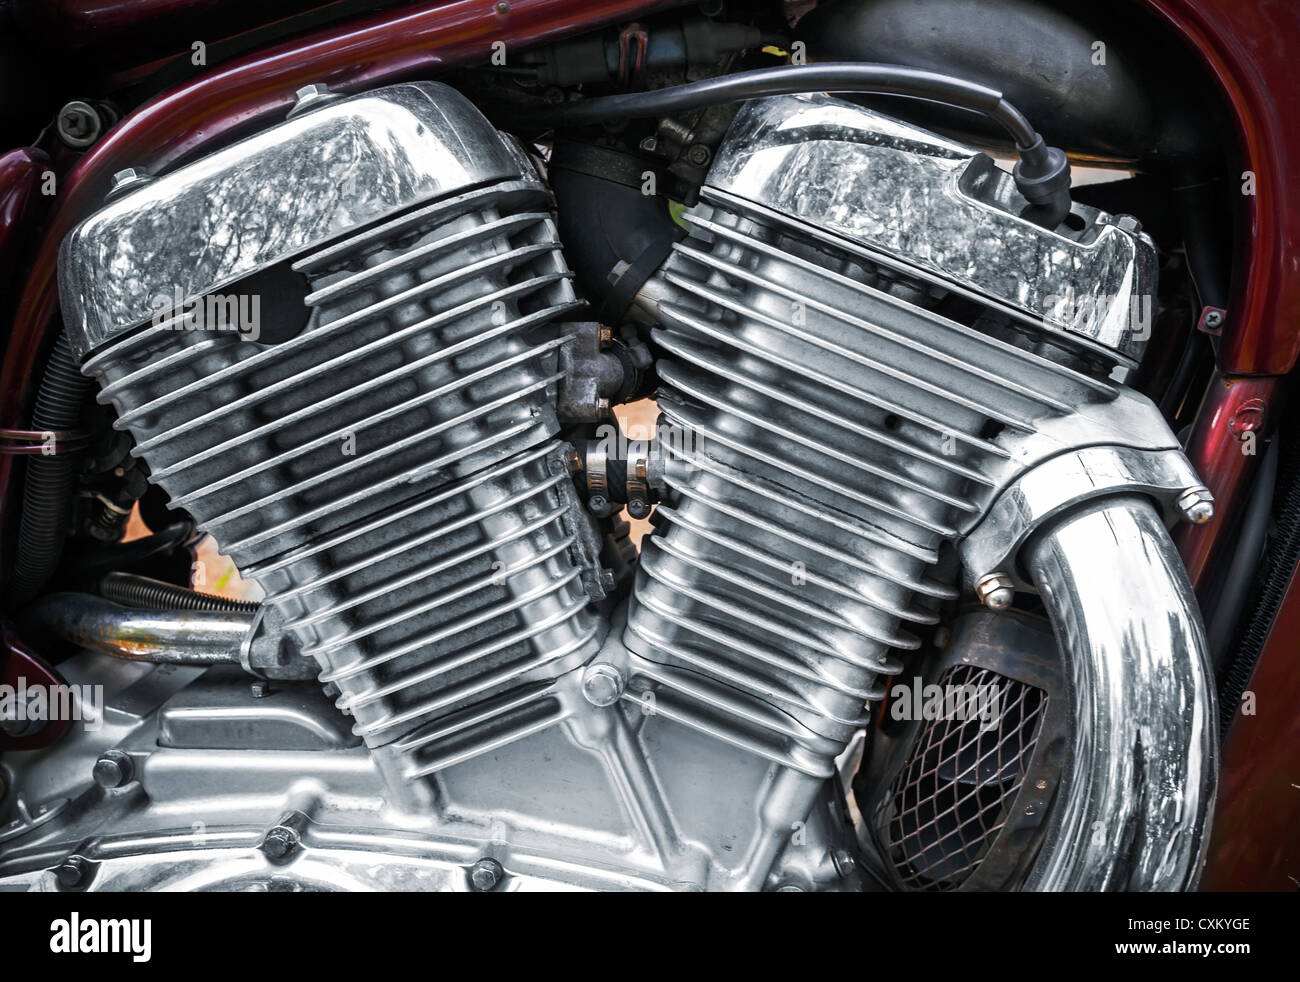 Shiny chromium-plated motorcycle engine closeup photo Stock Photo